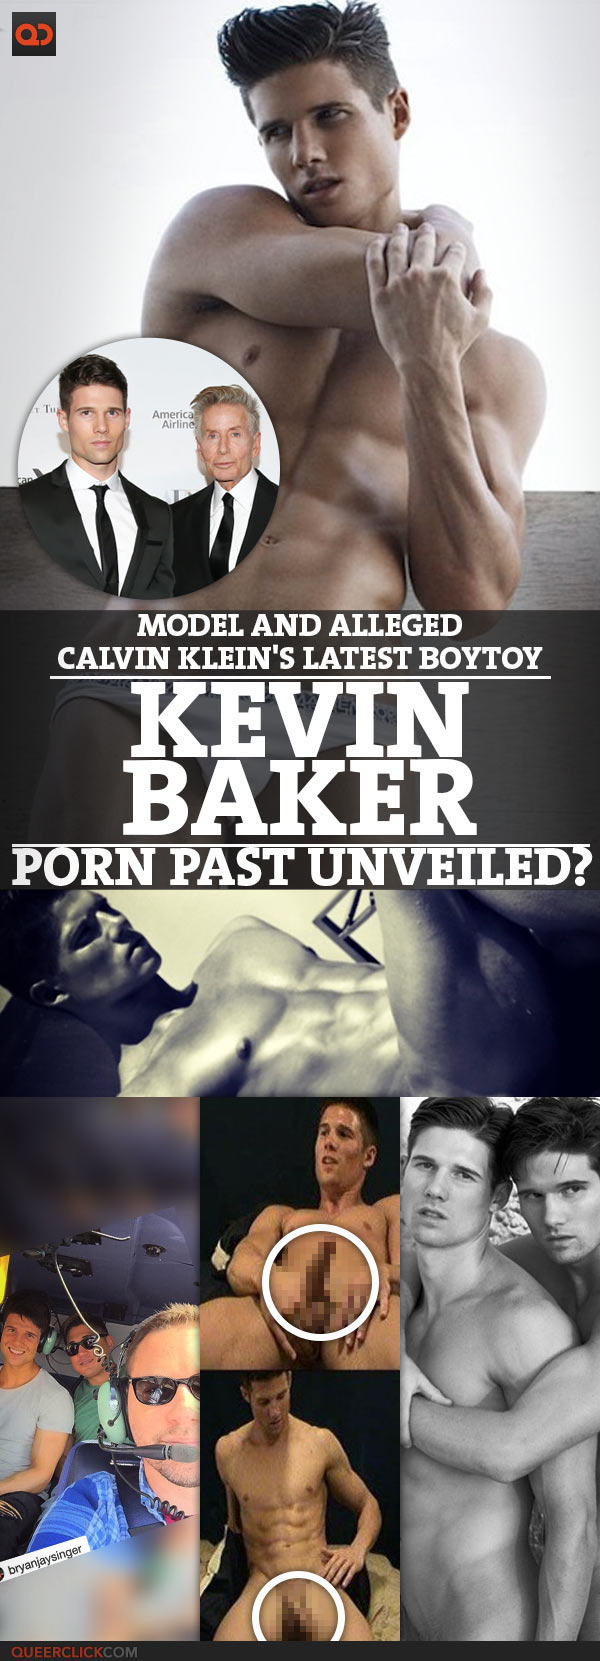 Simon Baker Gay Porn - Kevin Baker, Model And Alleged Calvin Klein's Latest â€œBoyToyâ€, Porn Past  Unveiled? - QueerClick